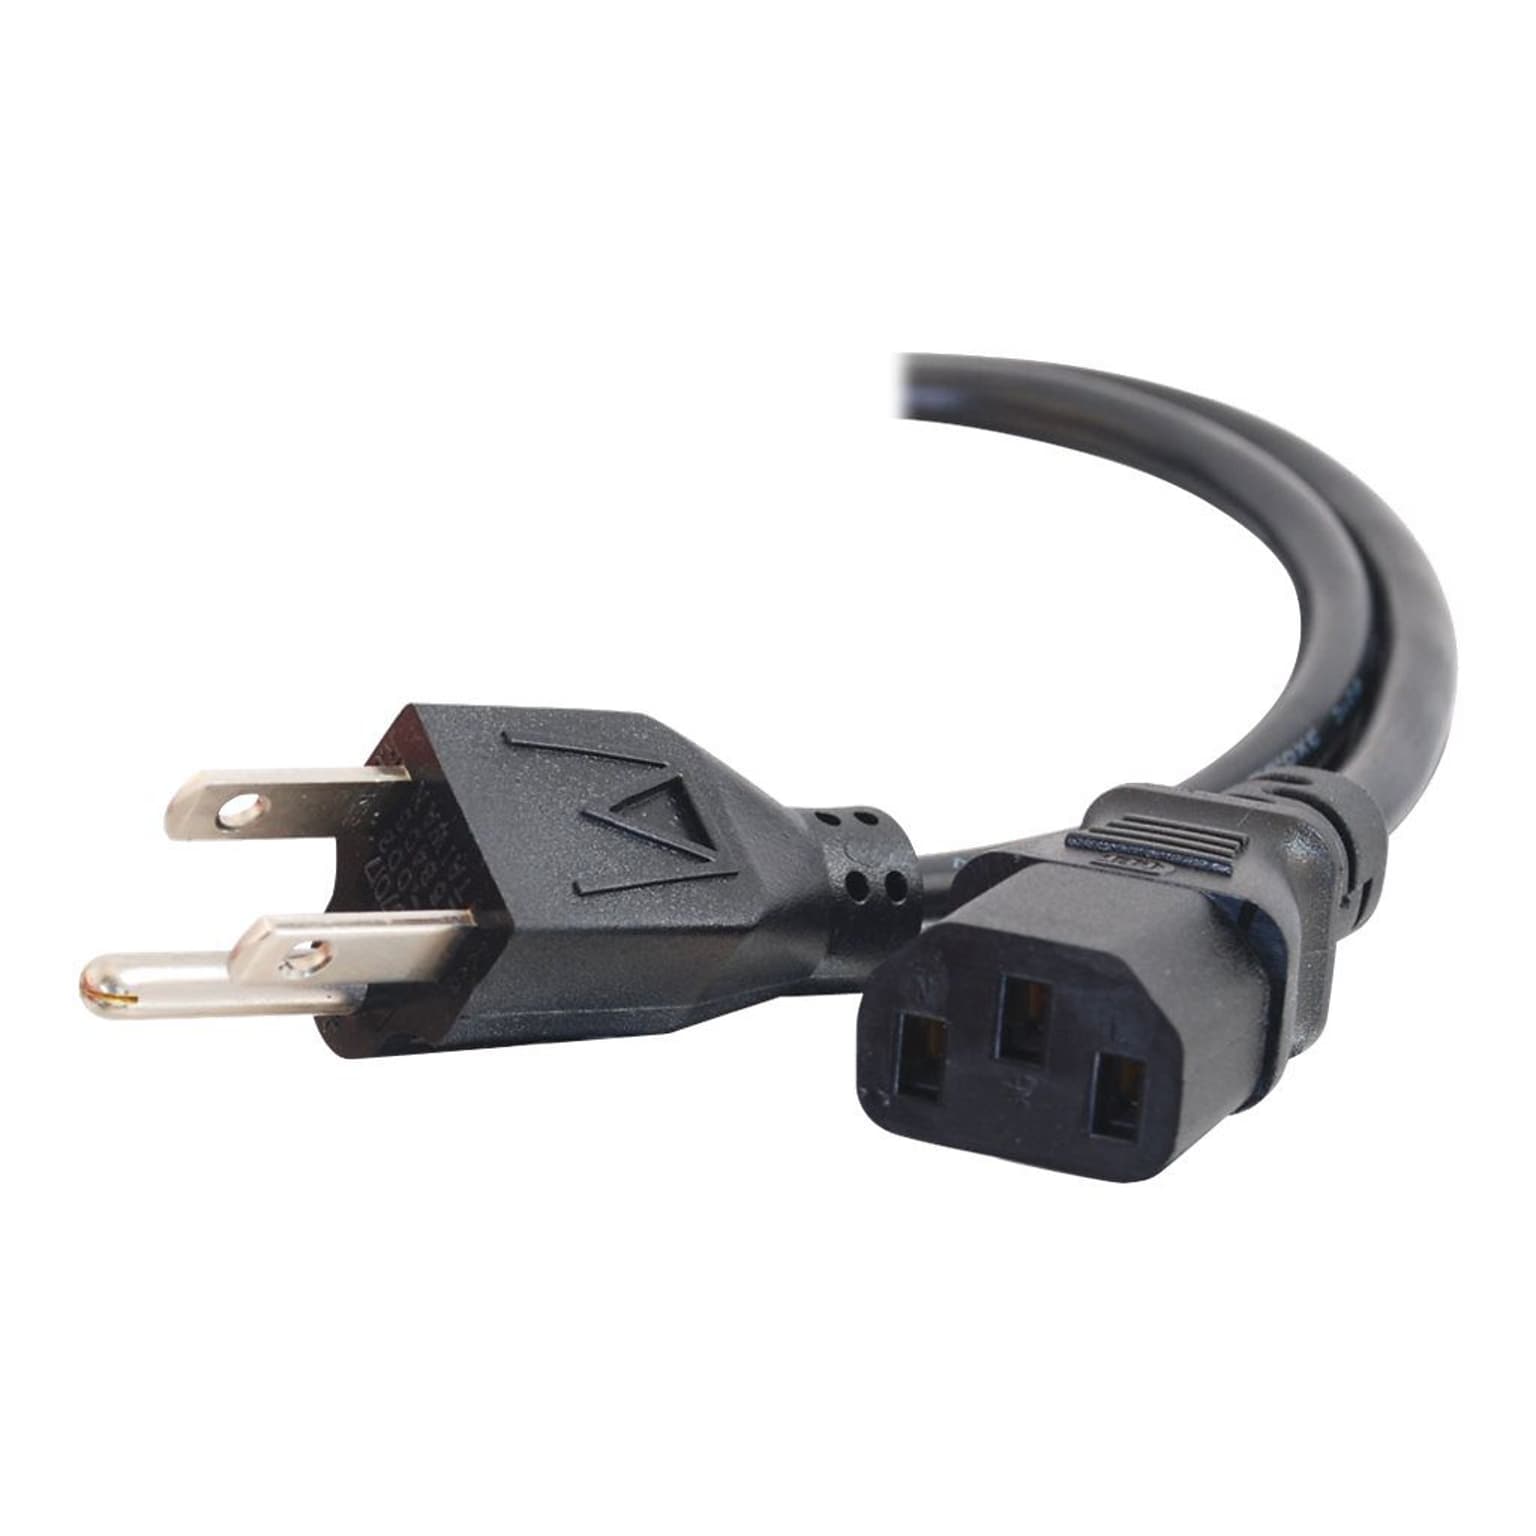 C2G® 8 NEMA 5-15P to IEC320C13 Universal Power Cord; Black